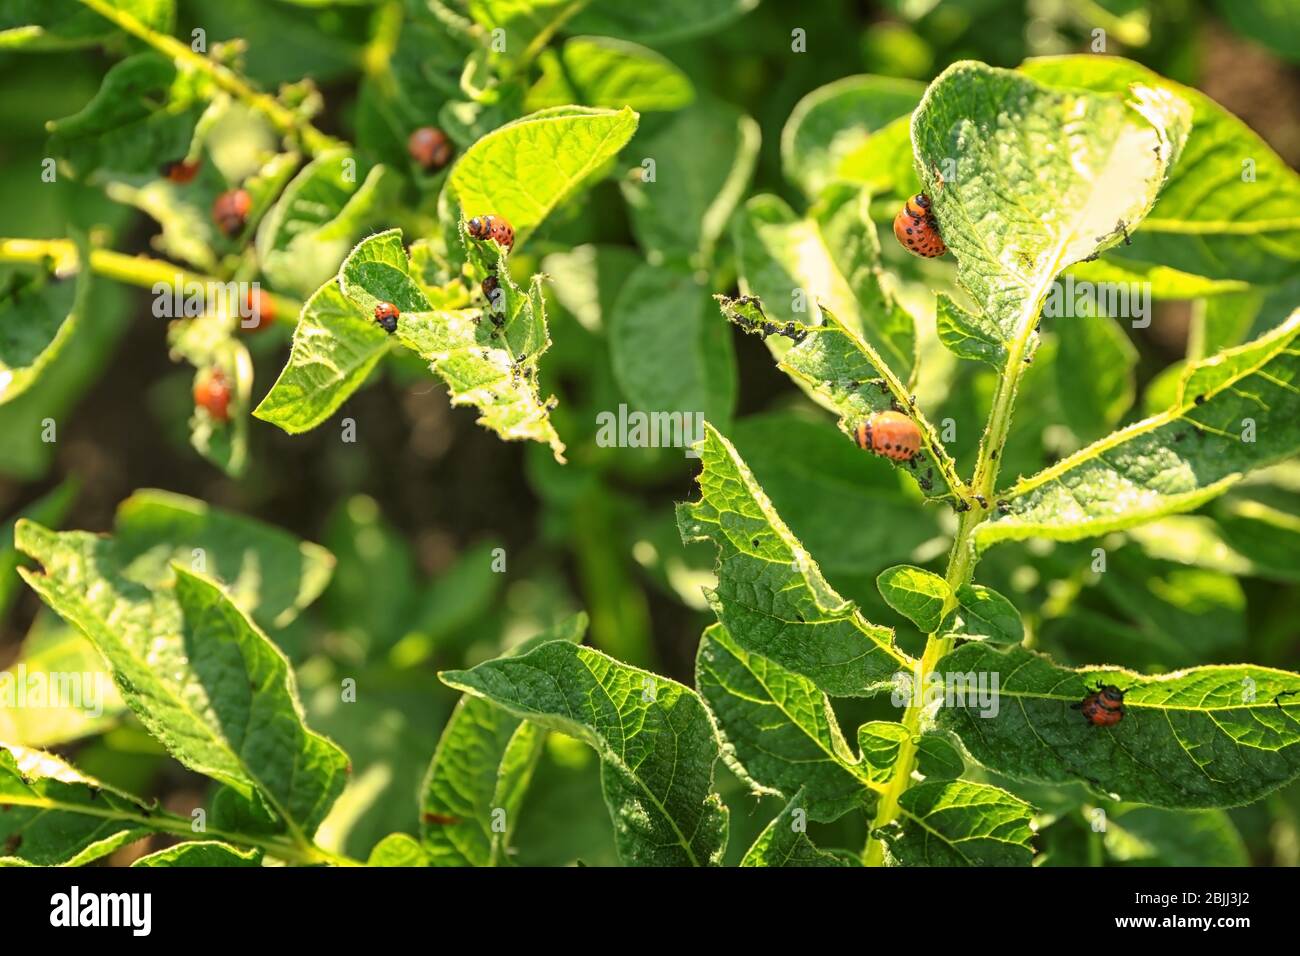 Larvas of Colorado beetle on potato plant Stock Photo